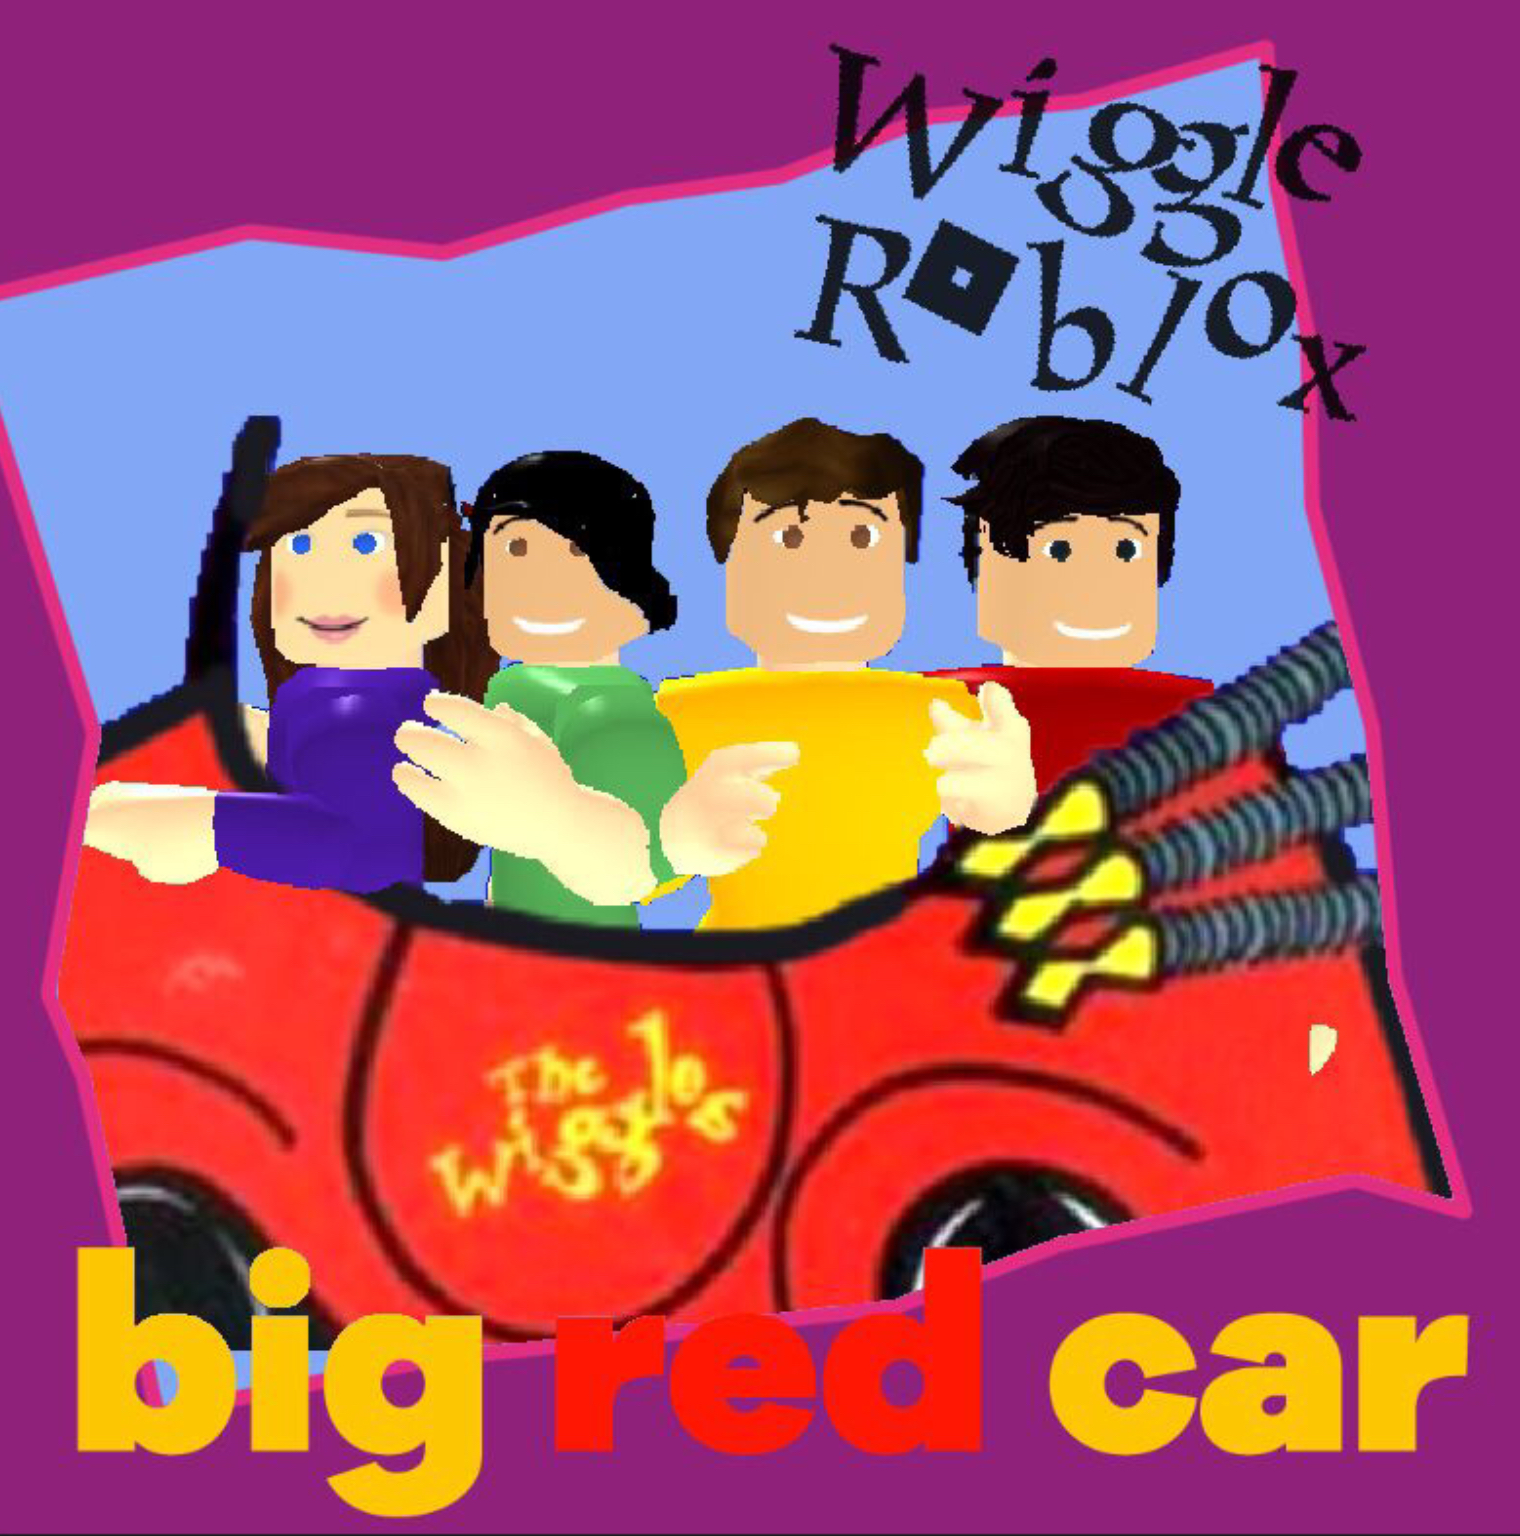 Big Red Car Wiggleroblox Wikia Wiki Fandom - the wiggles roblox big red car